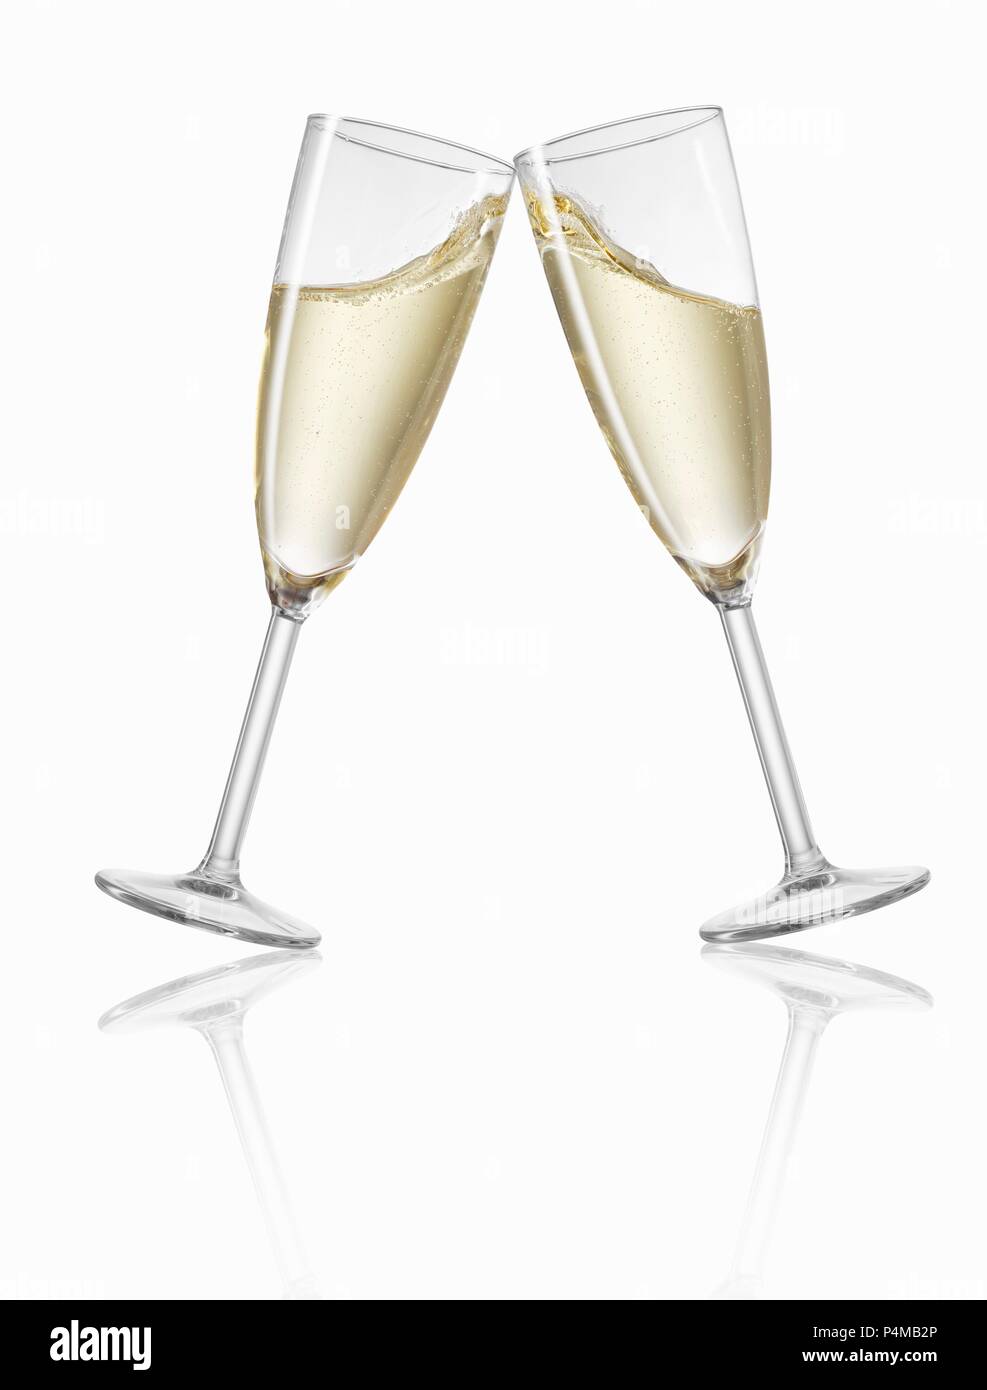 Clinking champagne glasses Stock Photo